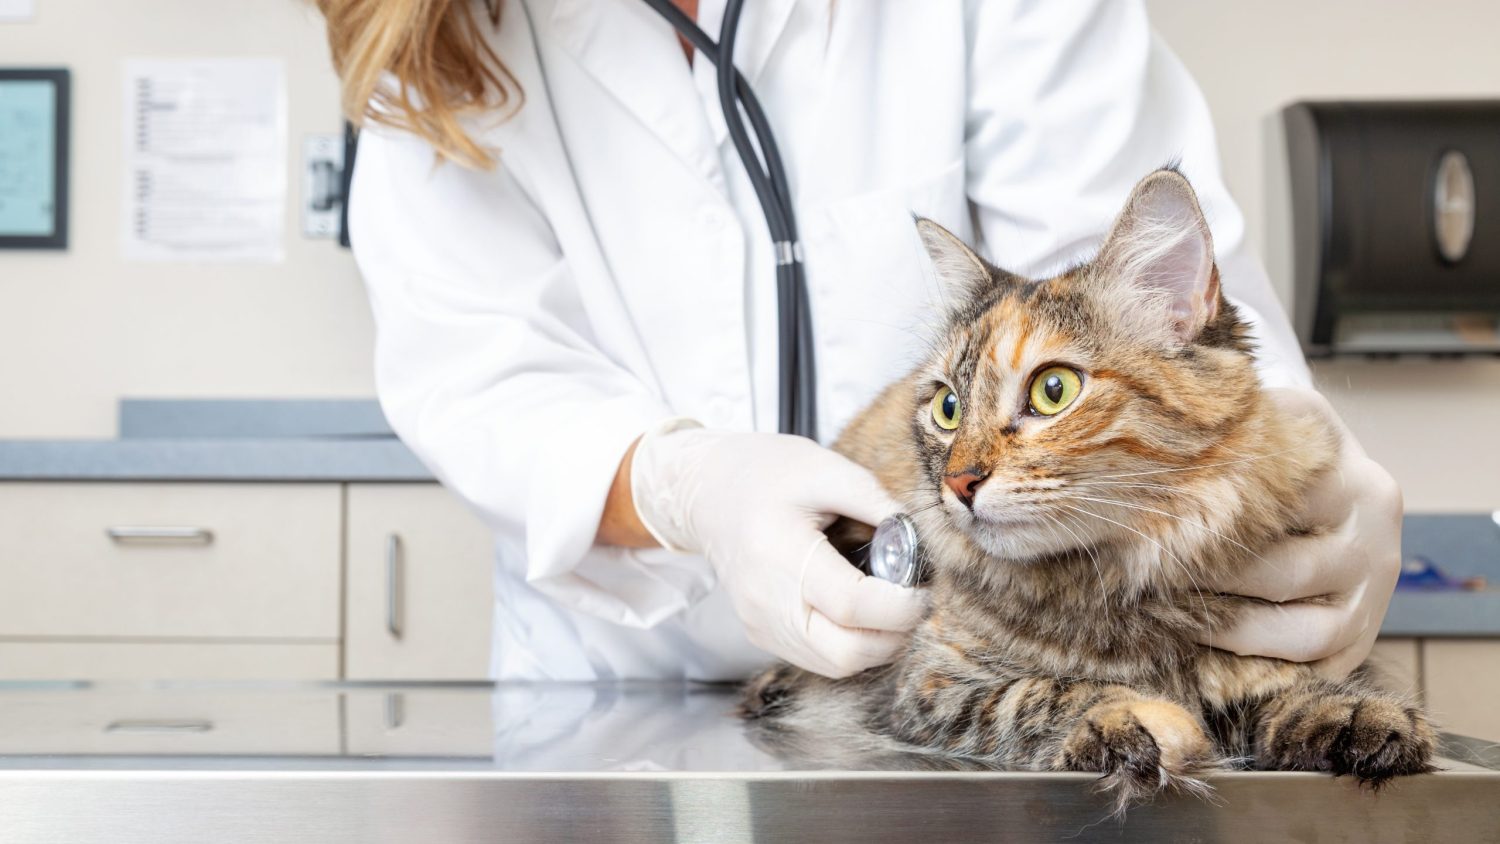 Don’t Skimp on Preventative Pet Care